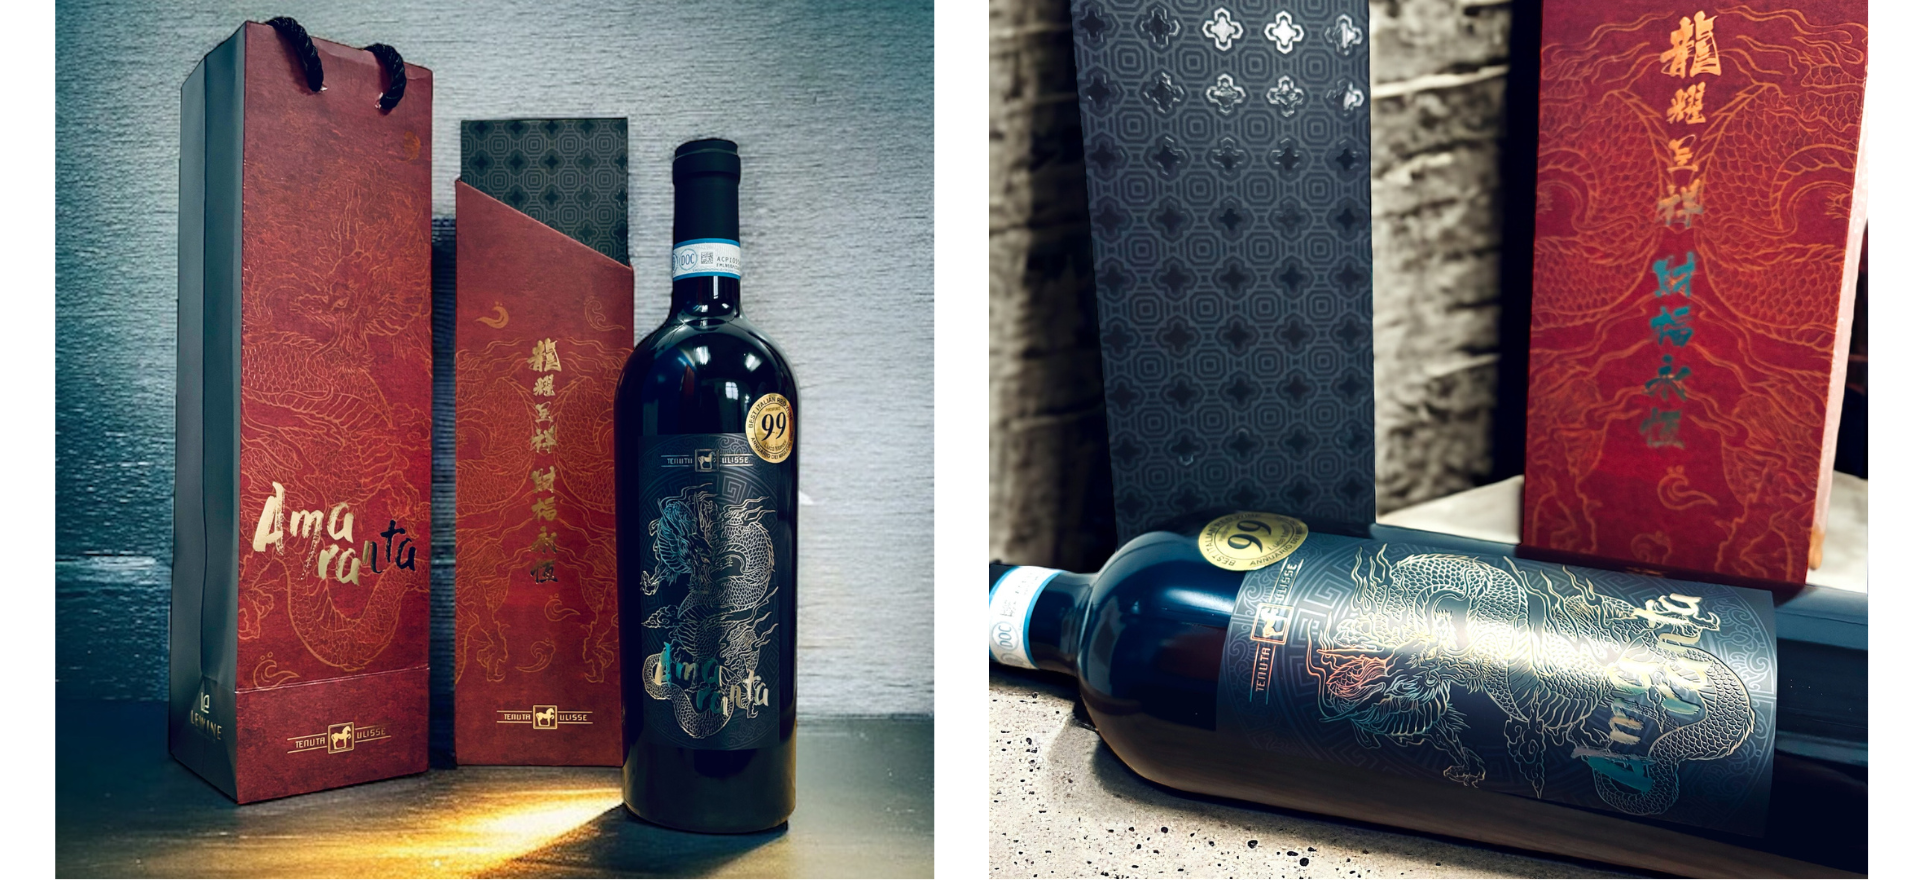 Tenuta Ulisse Amaranta Year of Dragon 2020 尤里西斯酒莊 永恆紅葡萄酒 龍年 禮盒 限定標 banner 3